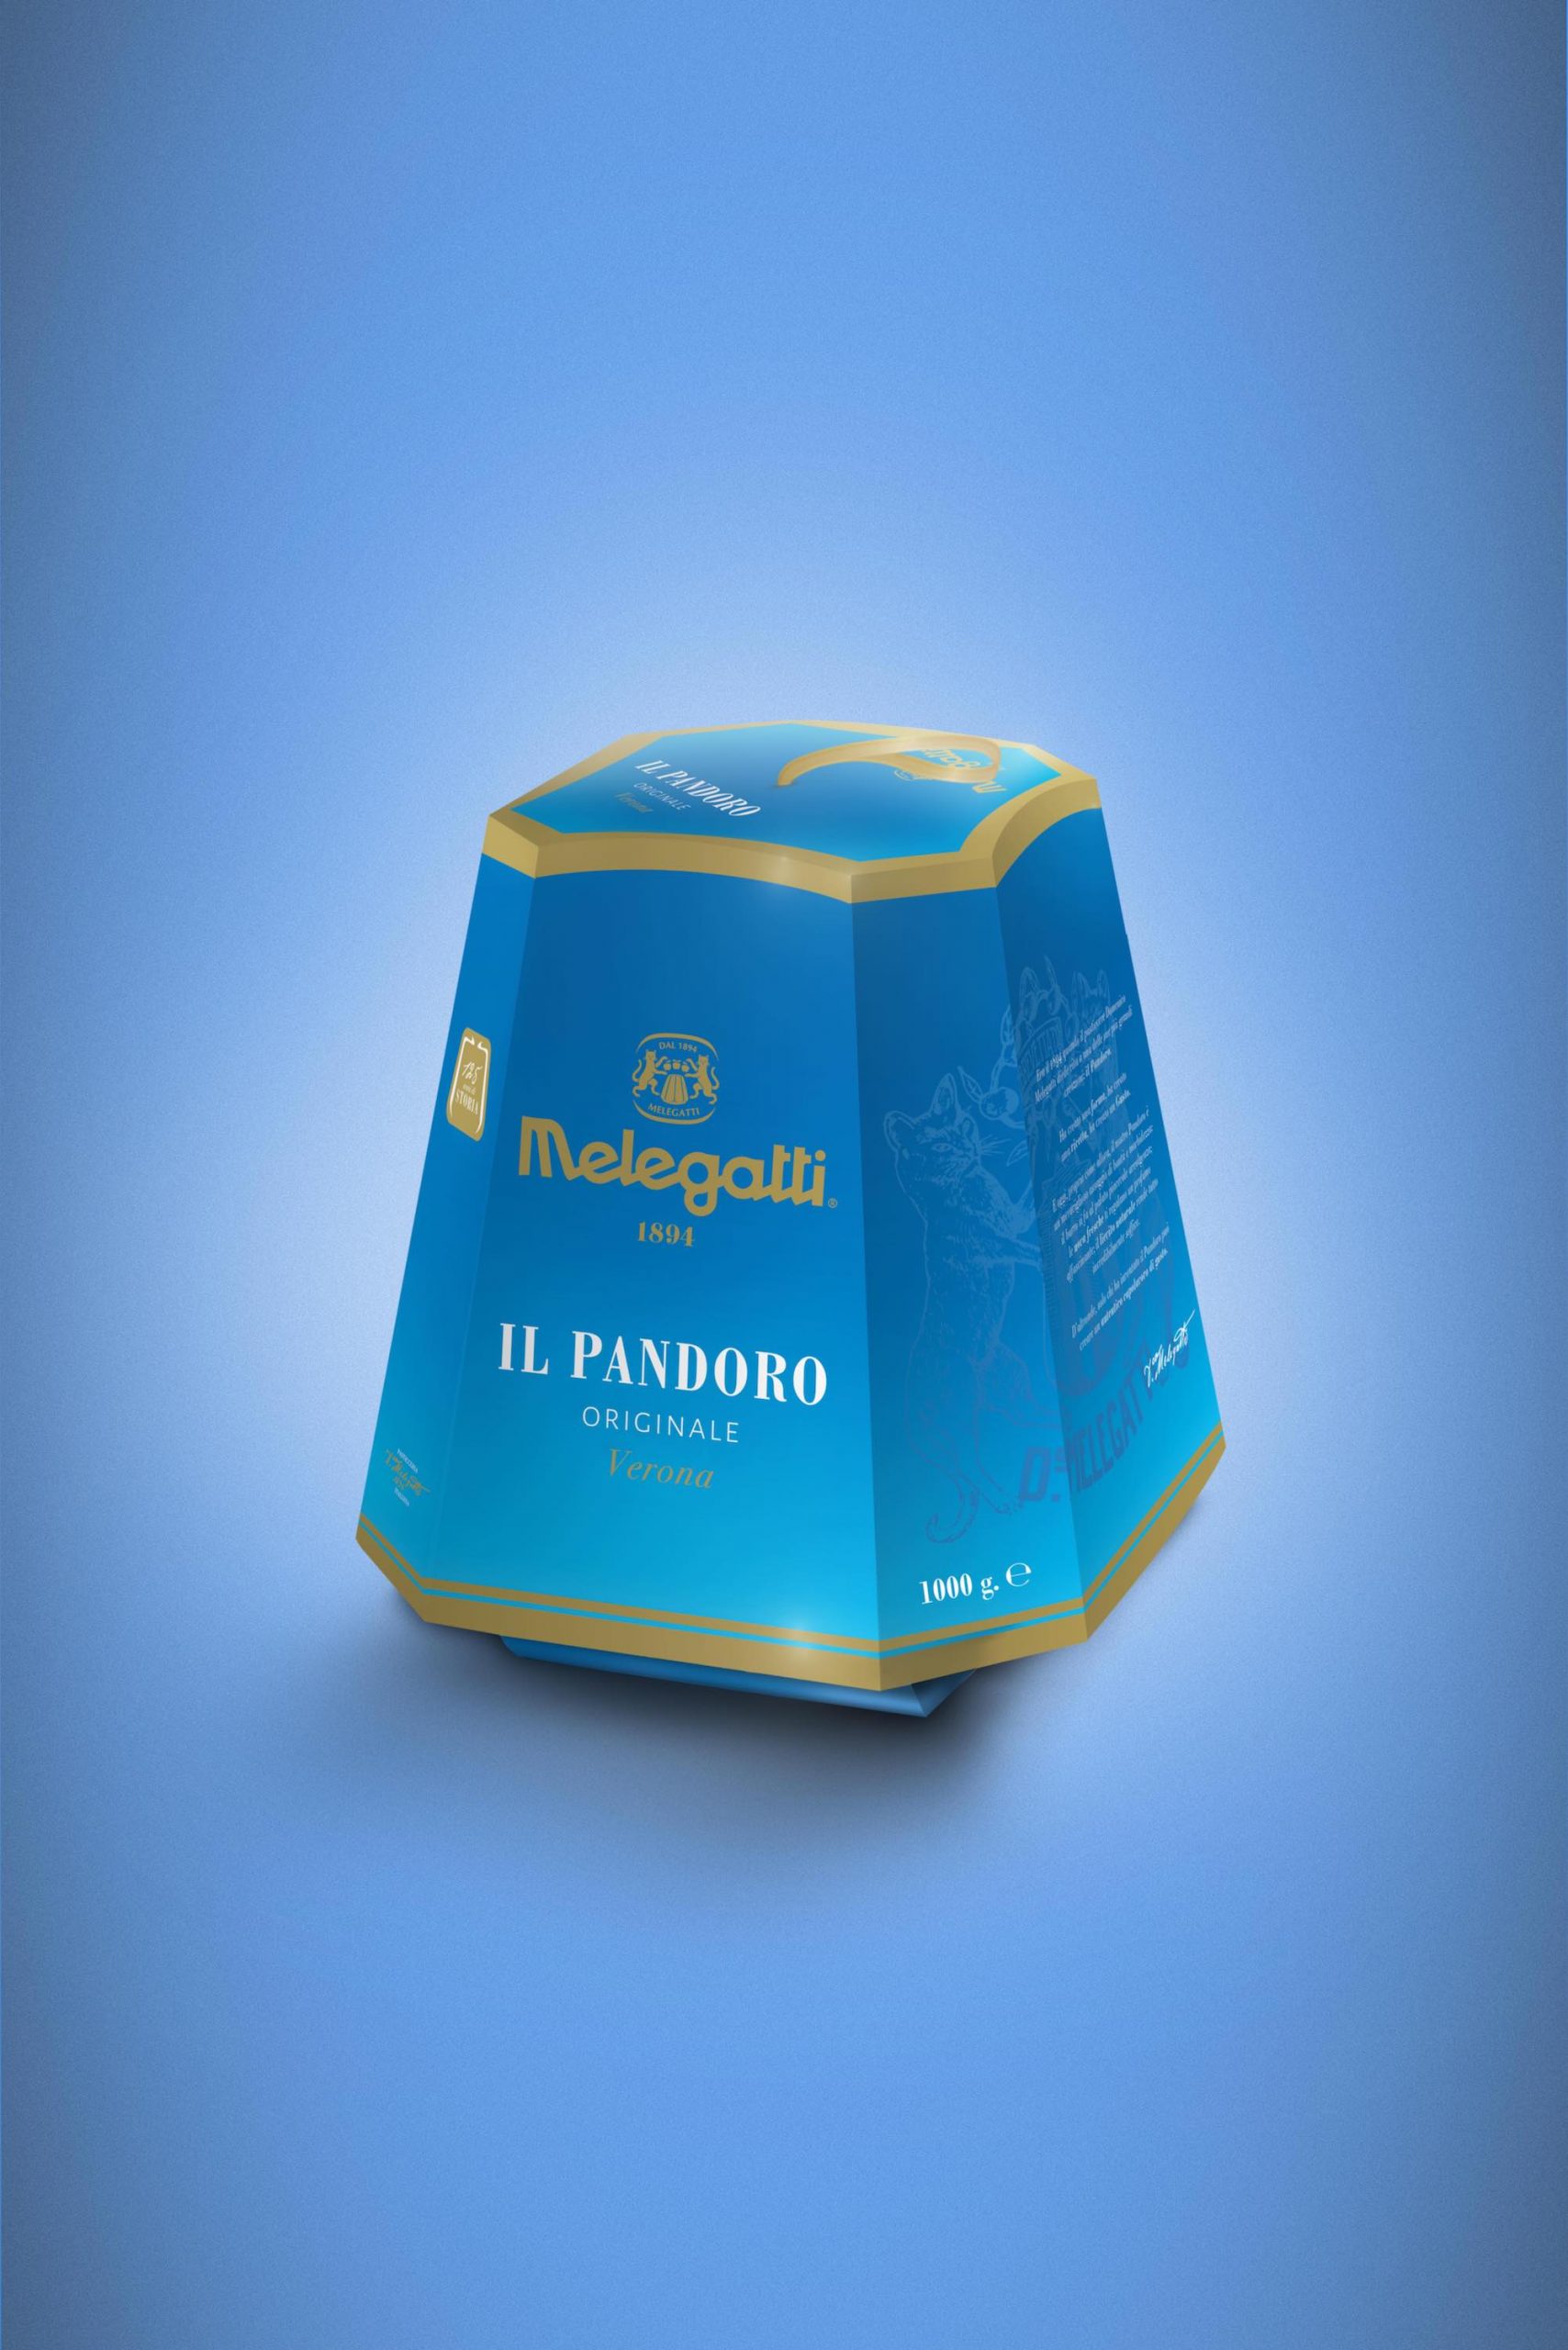 PANDORO ORIGINALE MELEGATTI RETURNS TO TV WITH ARMANDO TESTA TO CELEBRATE ITS 125TH ANNIVERSARY.